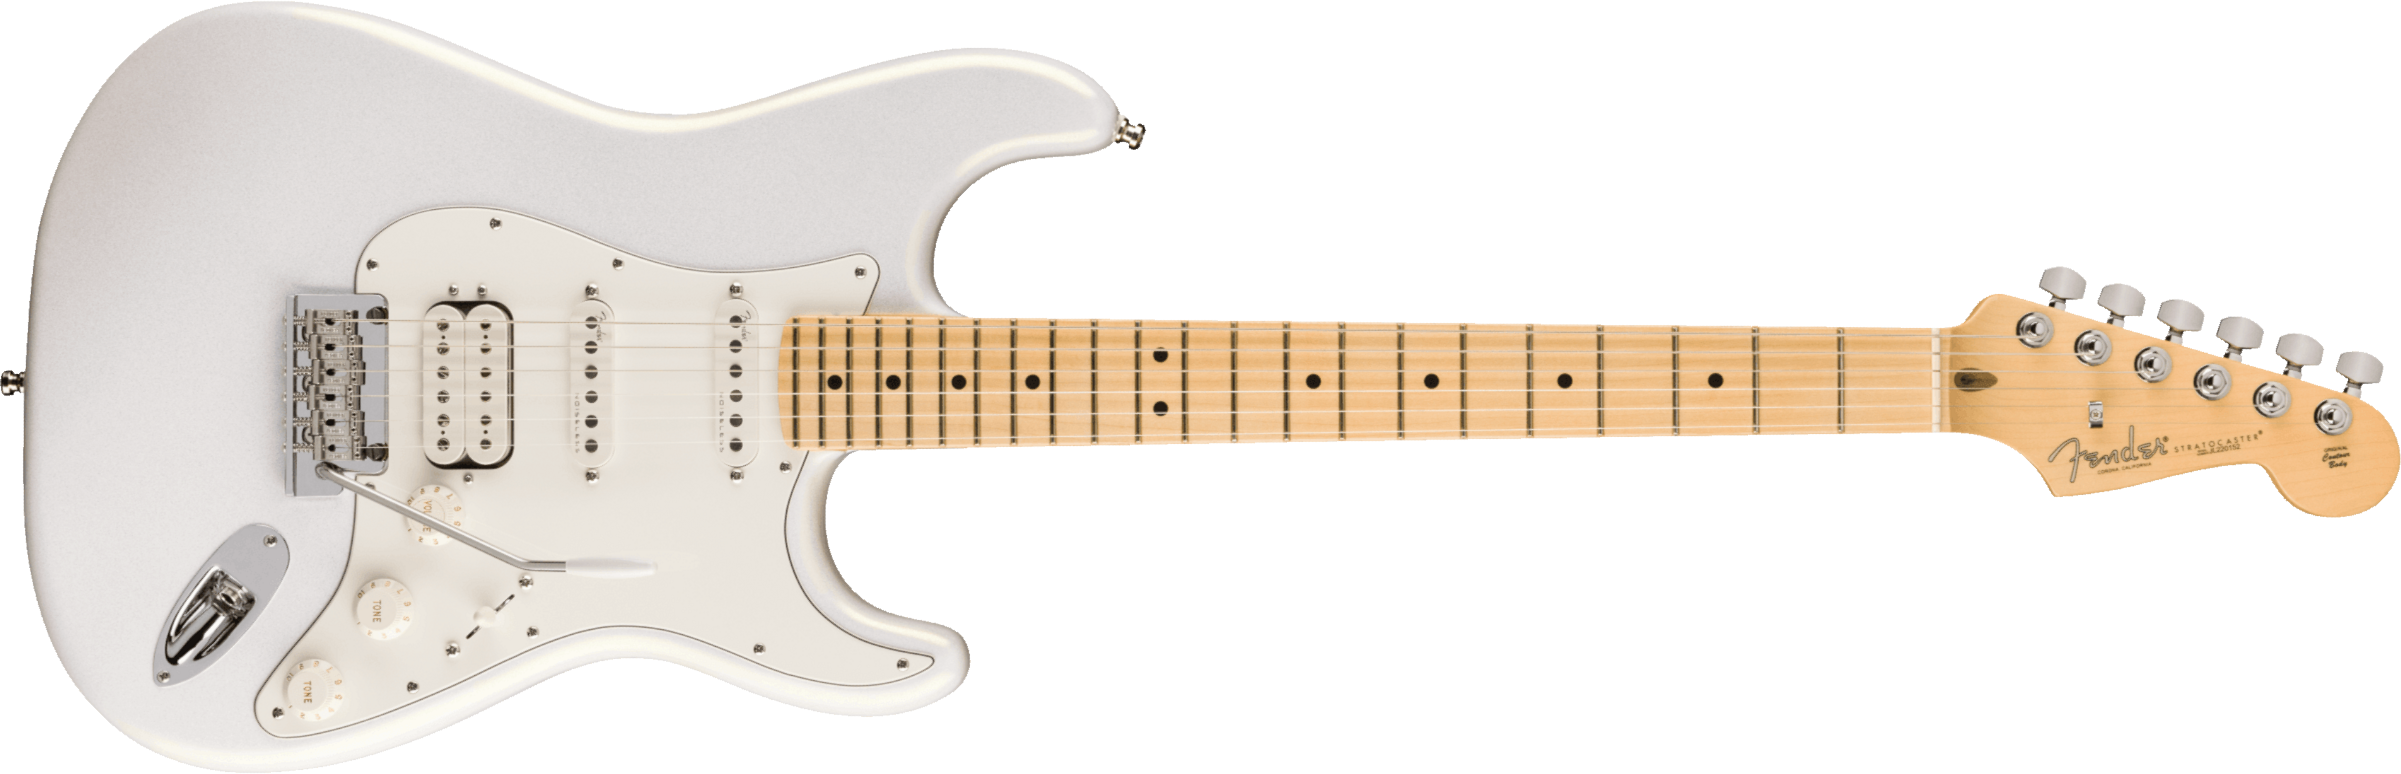 Fender Juanes Strat Trem Hss Mn - Luna White - Str shape electric guitar - Main picture